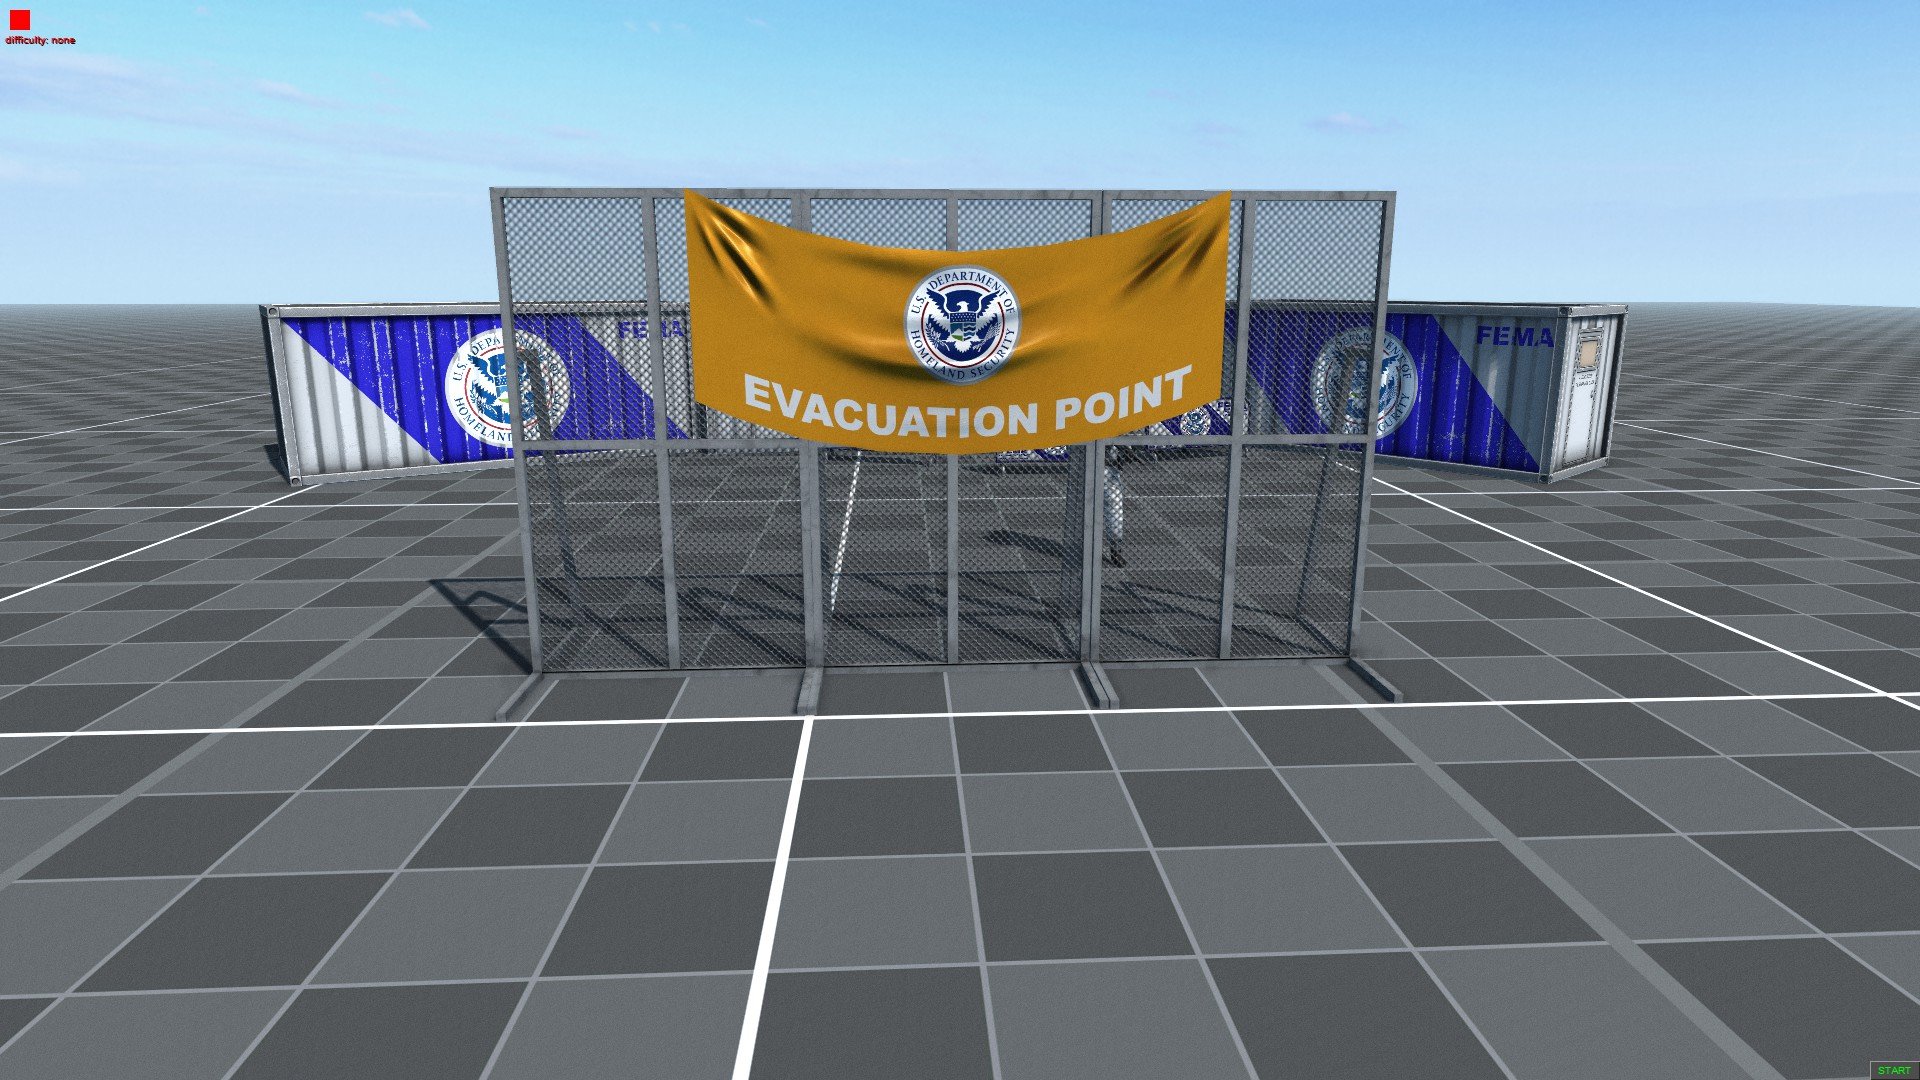 medium-sized evacuation point banner